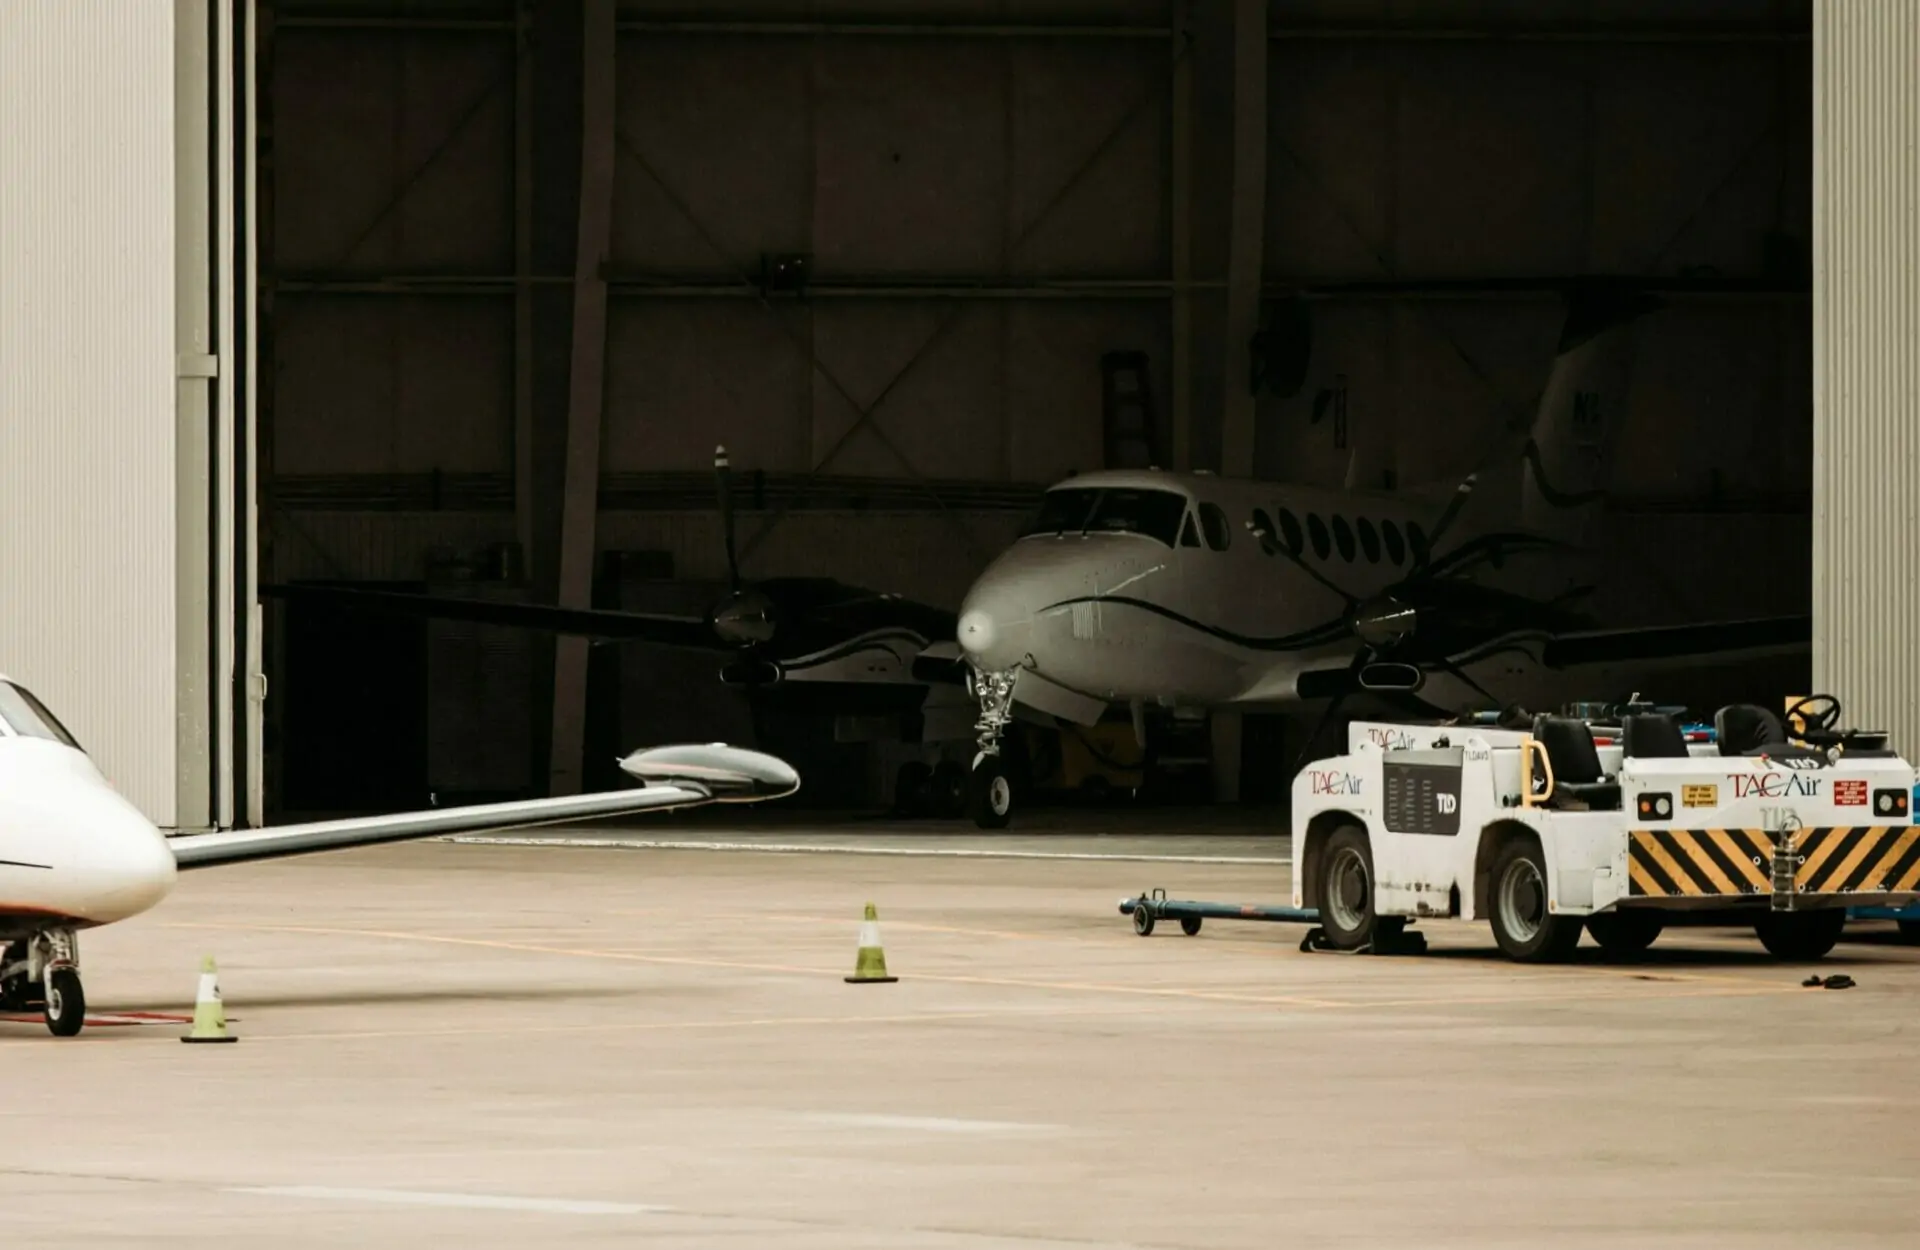 private jet in hangar